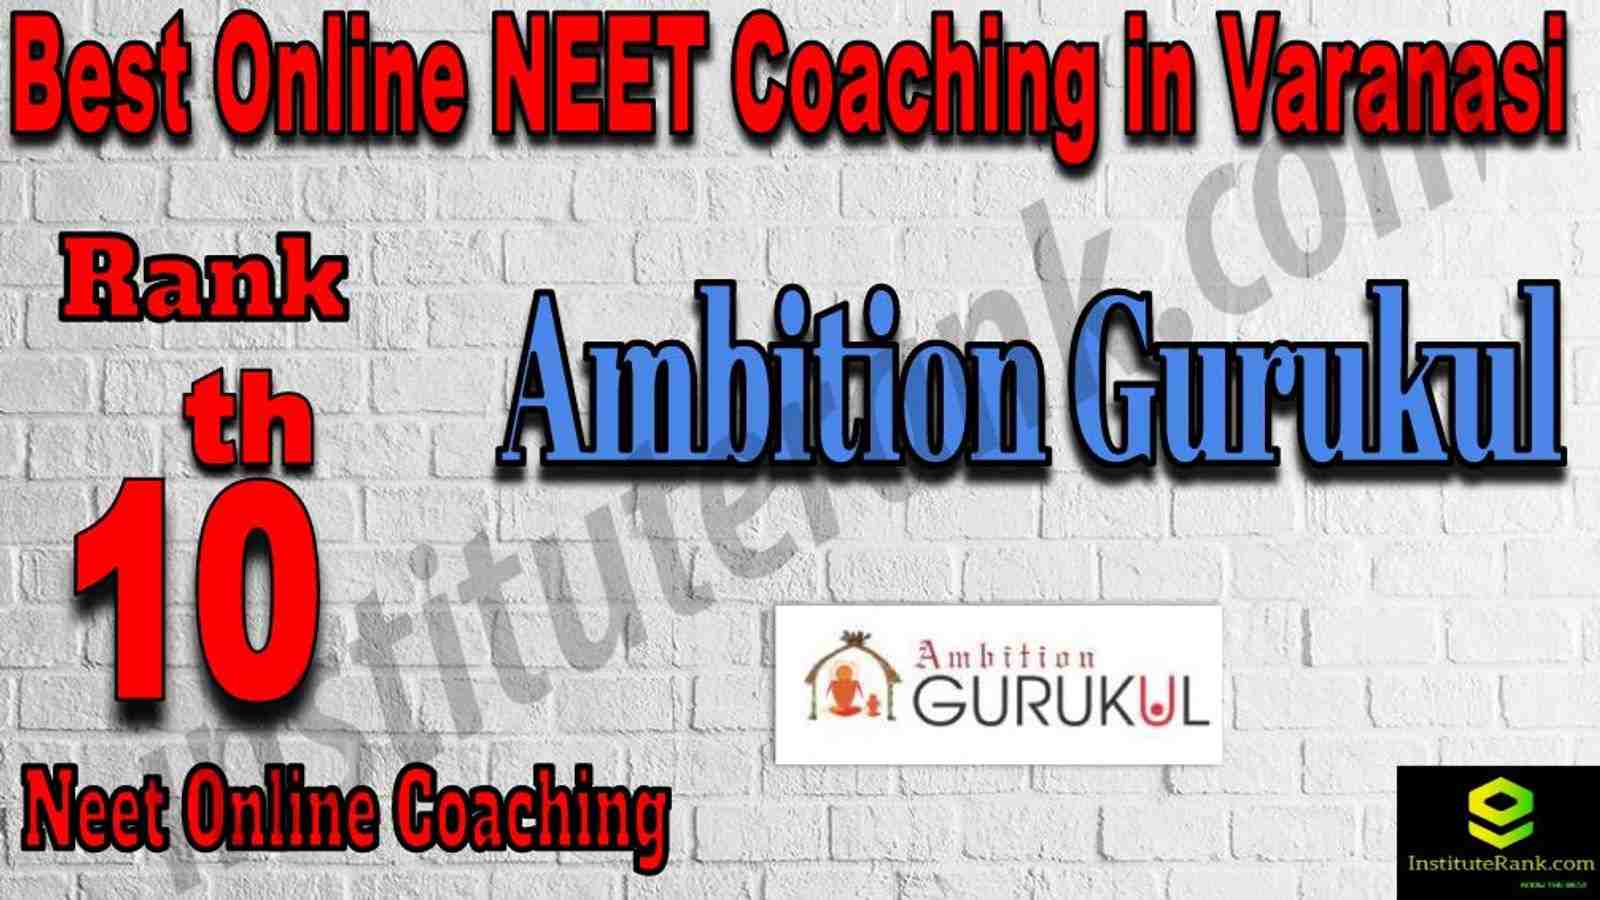 10th Best Online Neet Coaching in Varanasi